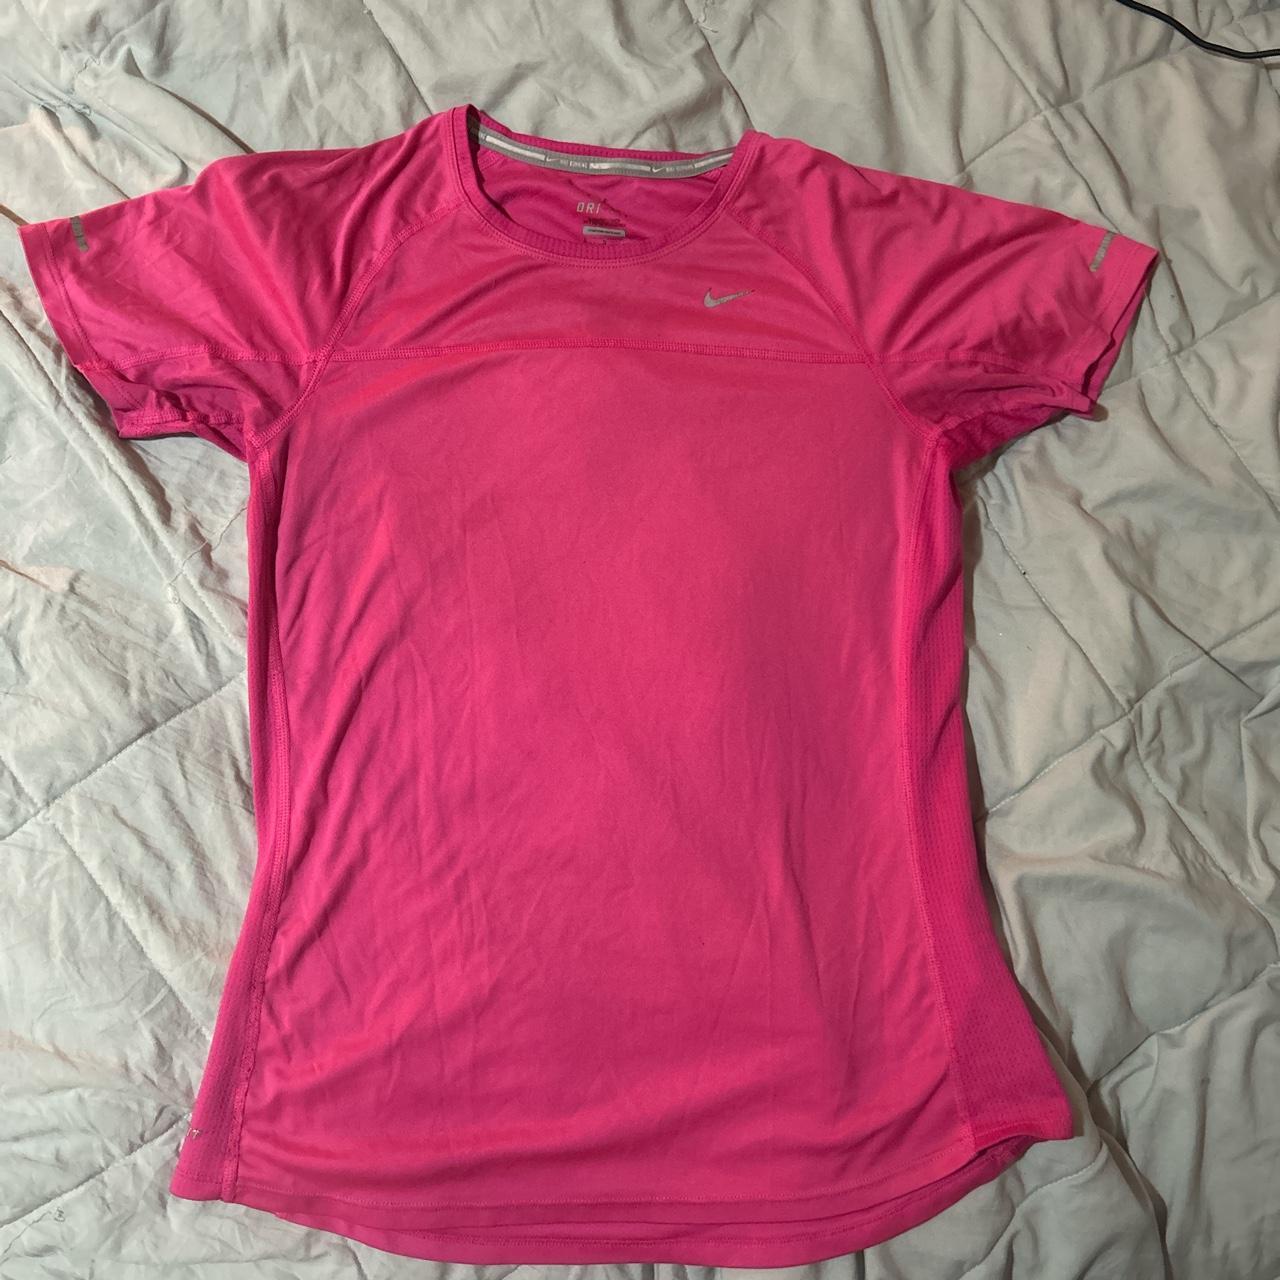 Pink Nike dry fit running shirt - Depop